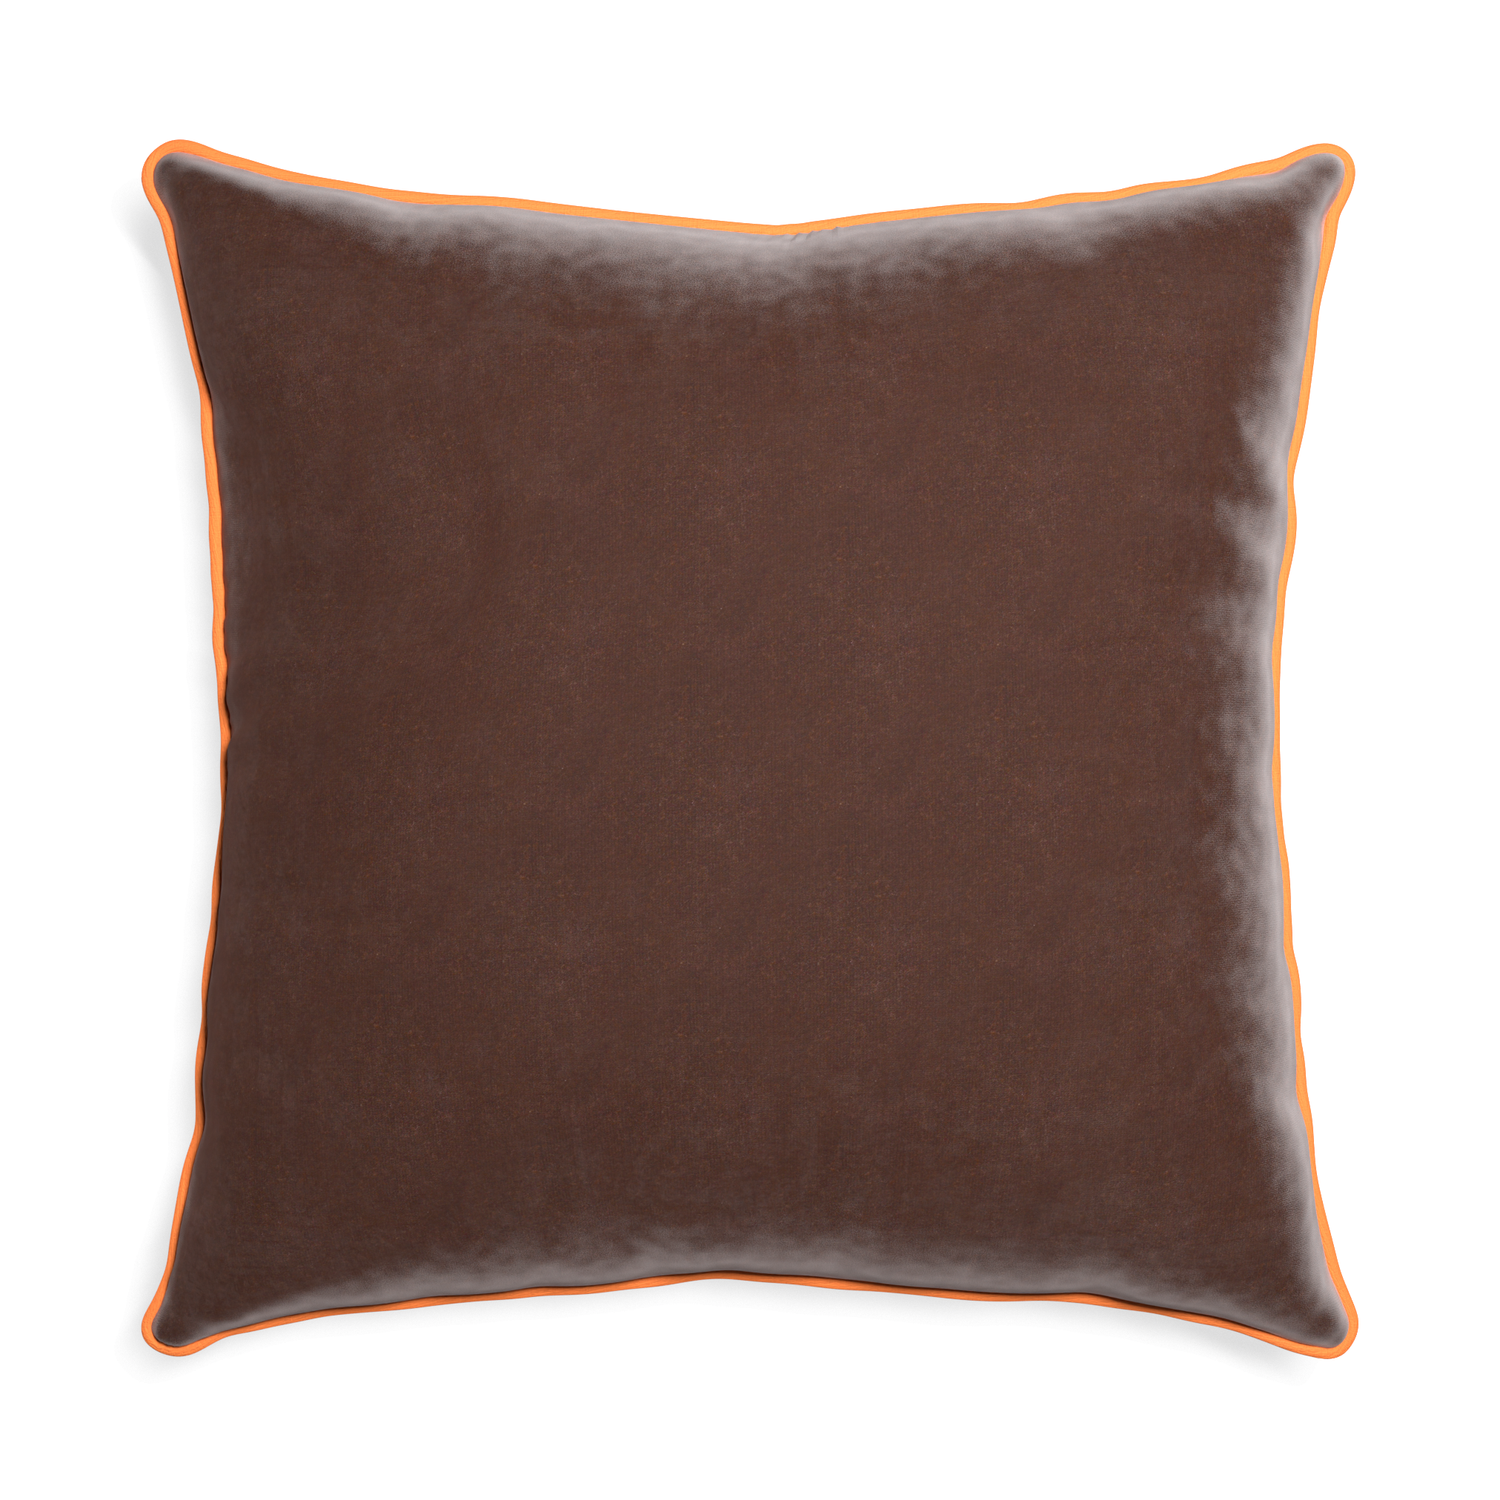 Euro-sham walnut velvet custom pillow with clementine piping on white background